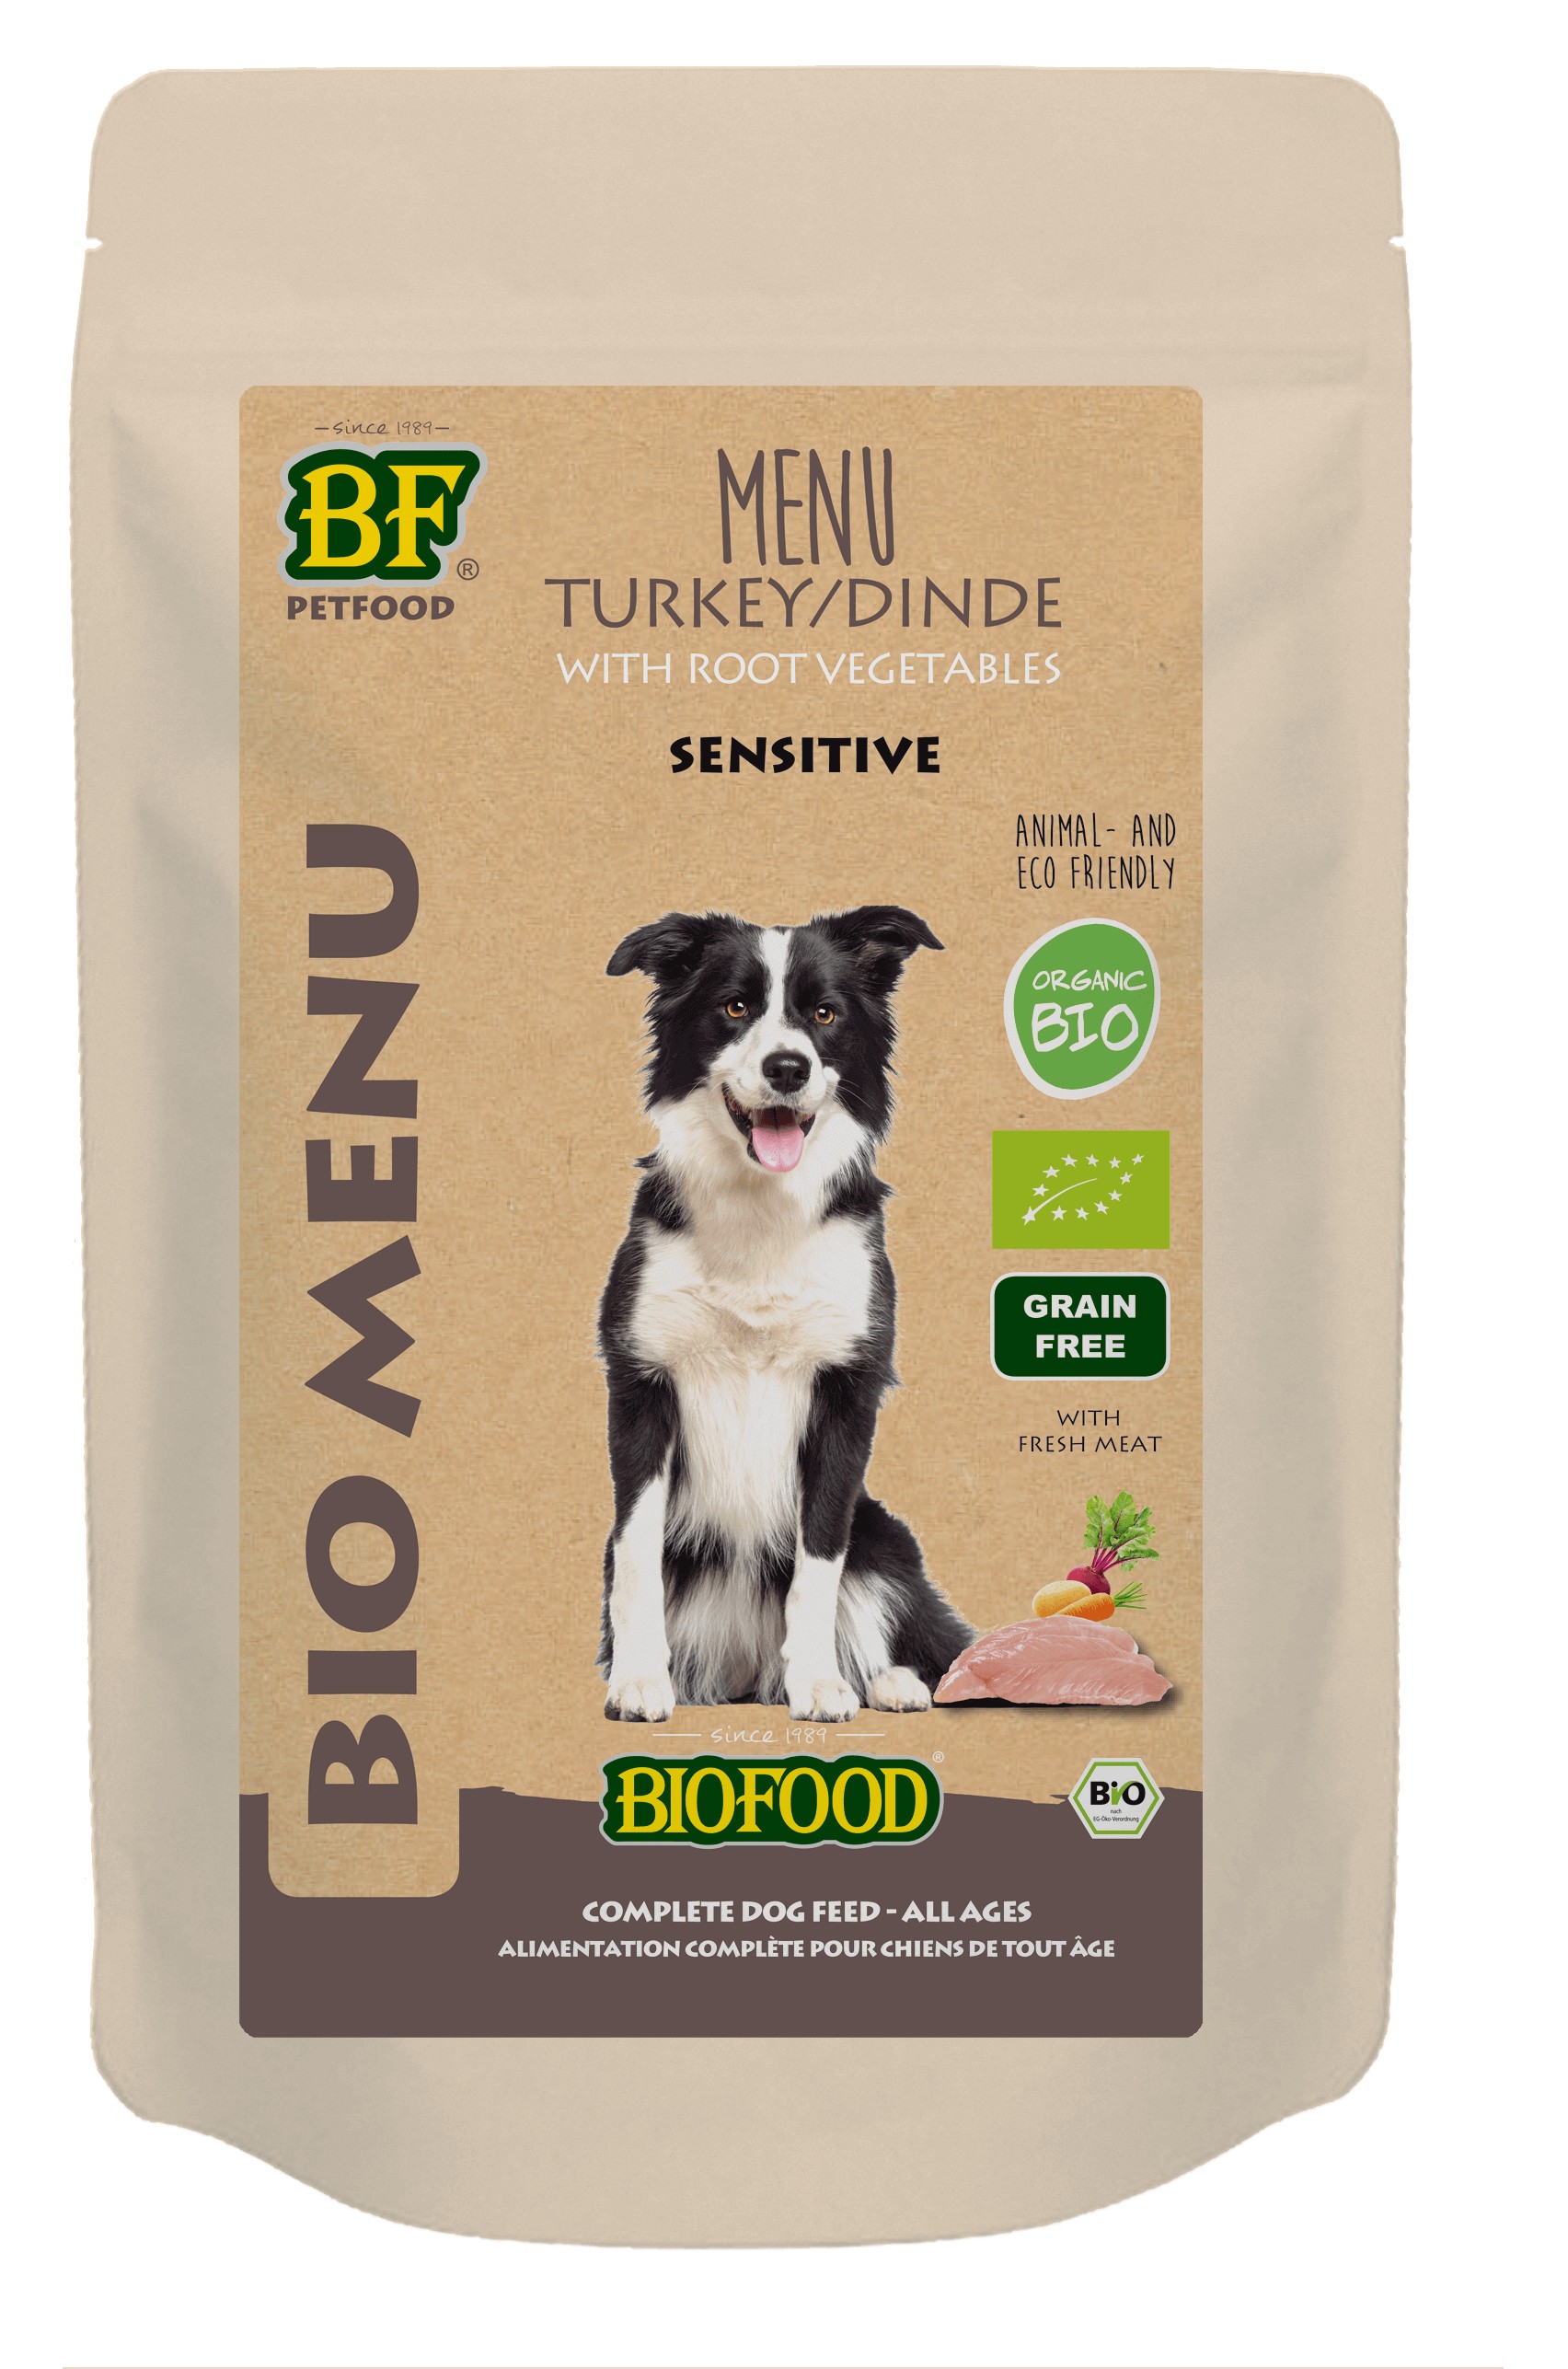 Afbeelding van 2x (15x 150 g) BF Petfood Biofood Organic Bio Menu Sensitive kalkoen natvoer hond (150 g)